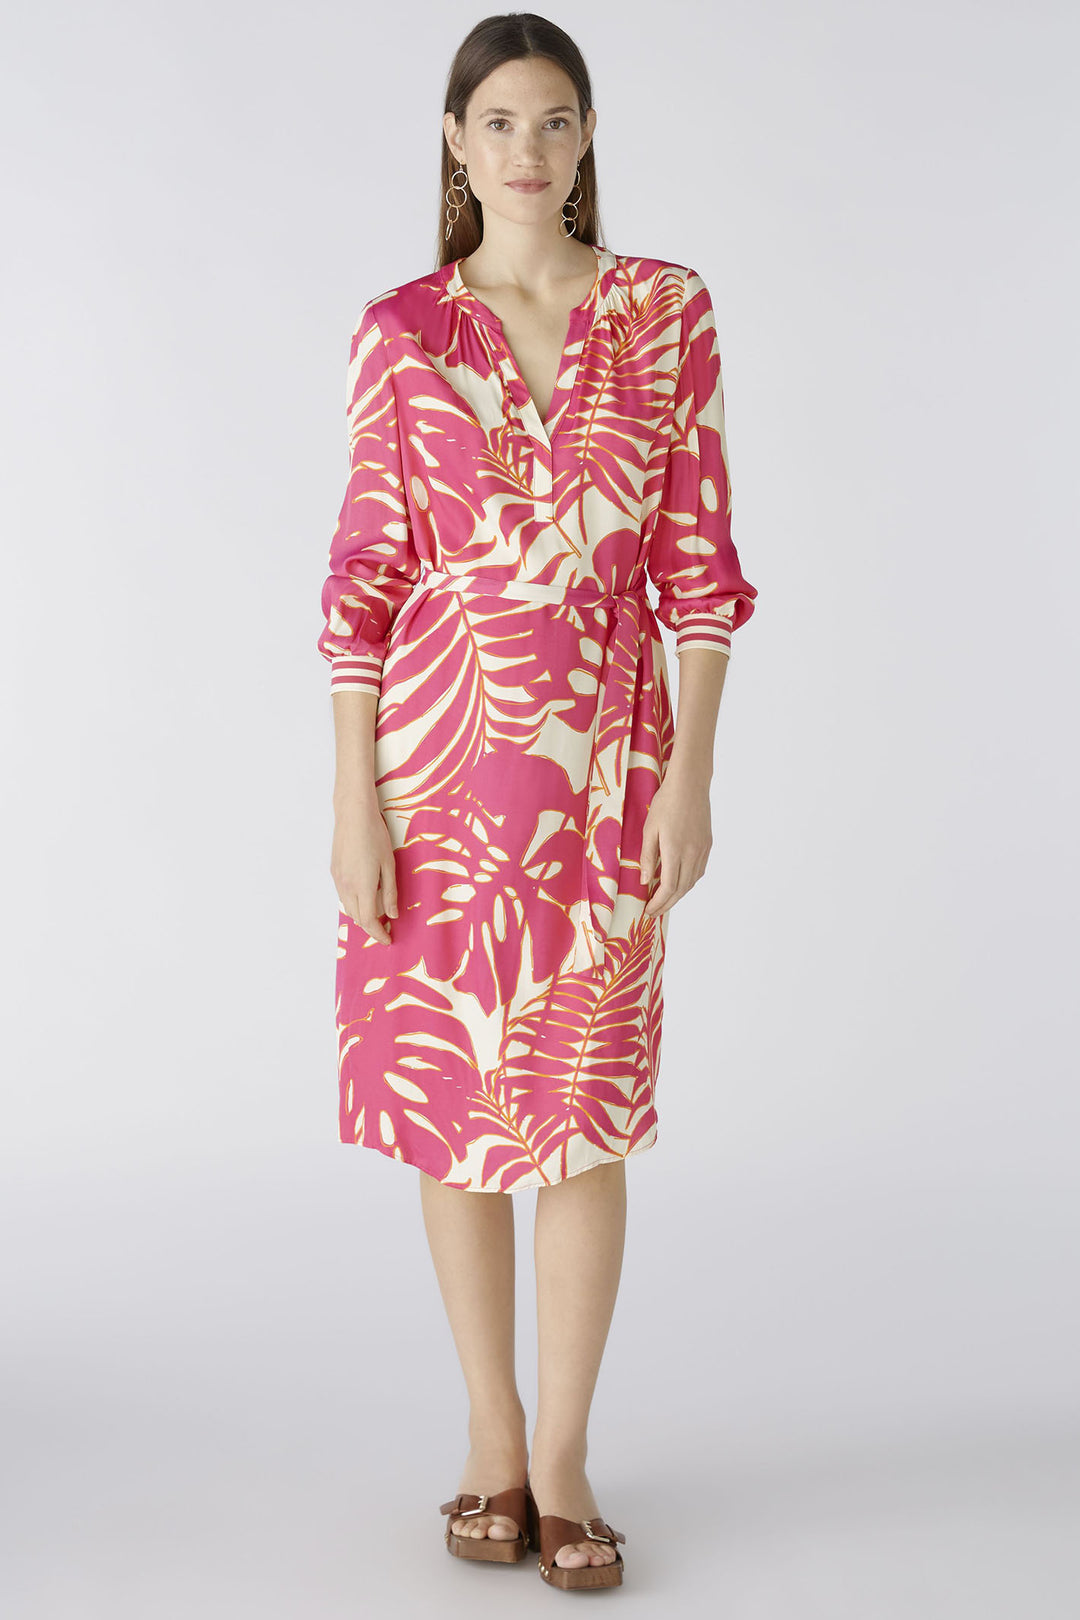 Oui 87550 Pink White Palm Print Dress With Sleeves - Olivia Grace Fashion